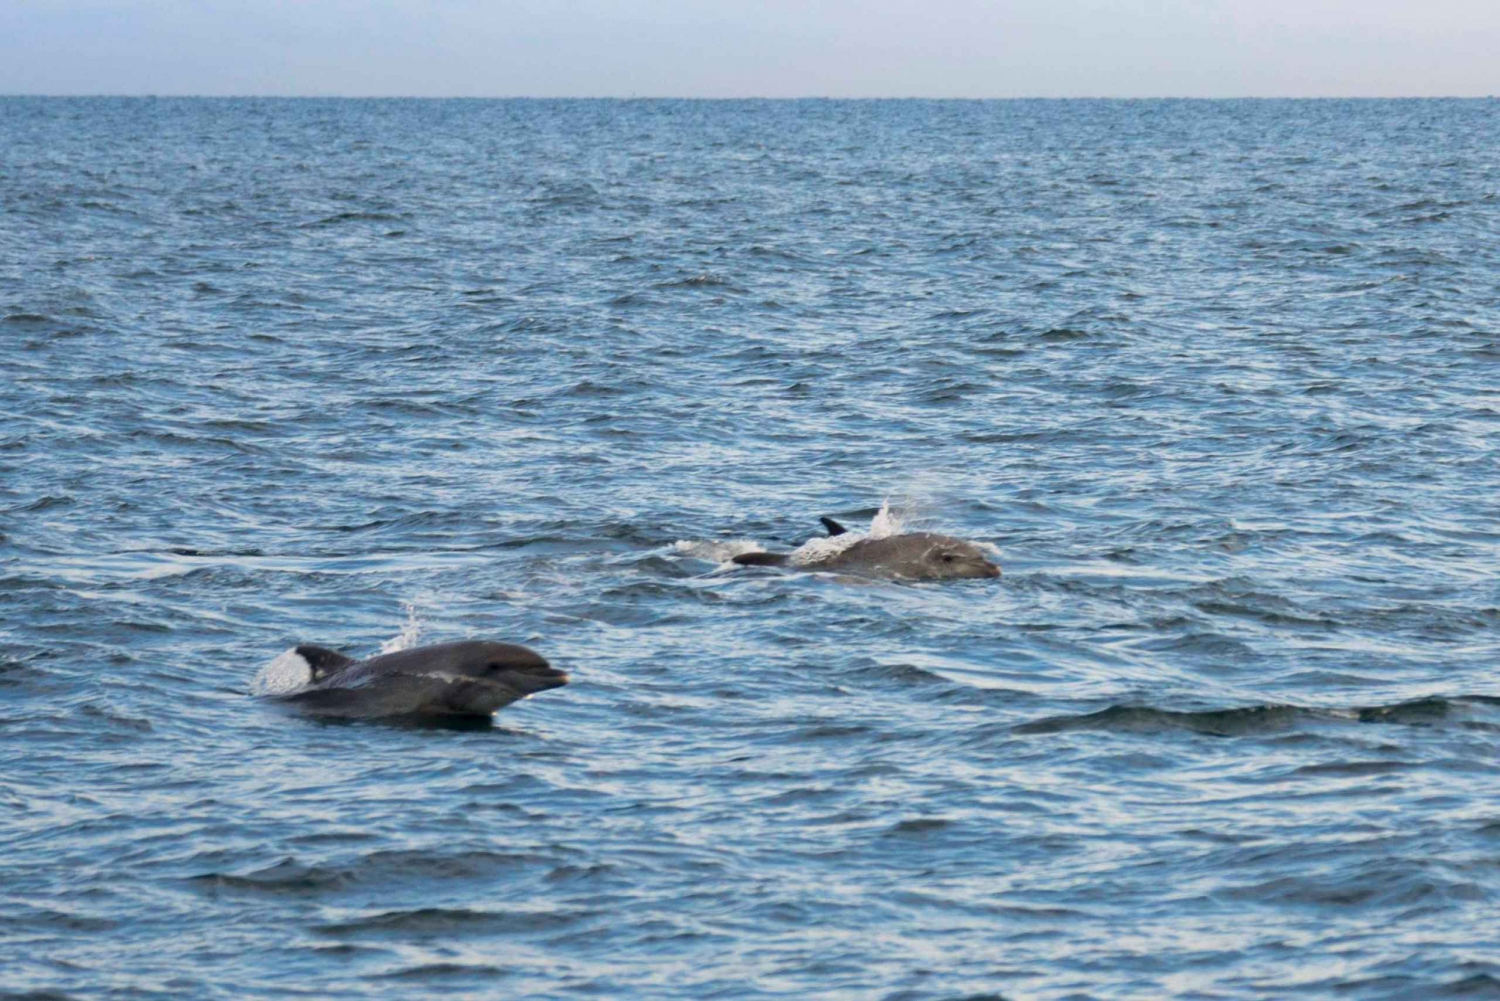 Poreč: Evening Boat Trip to Discover Dolphins